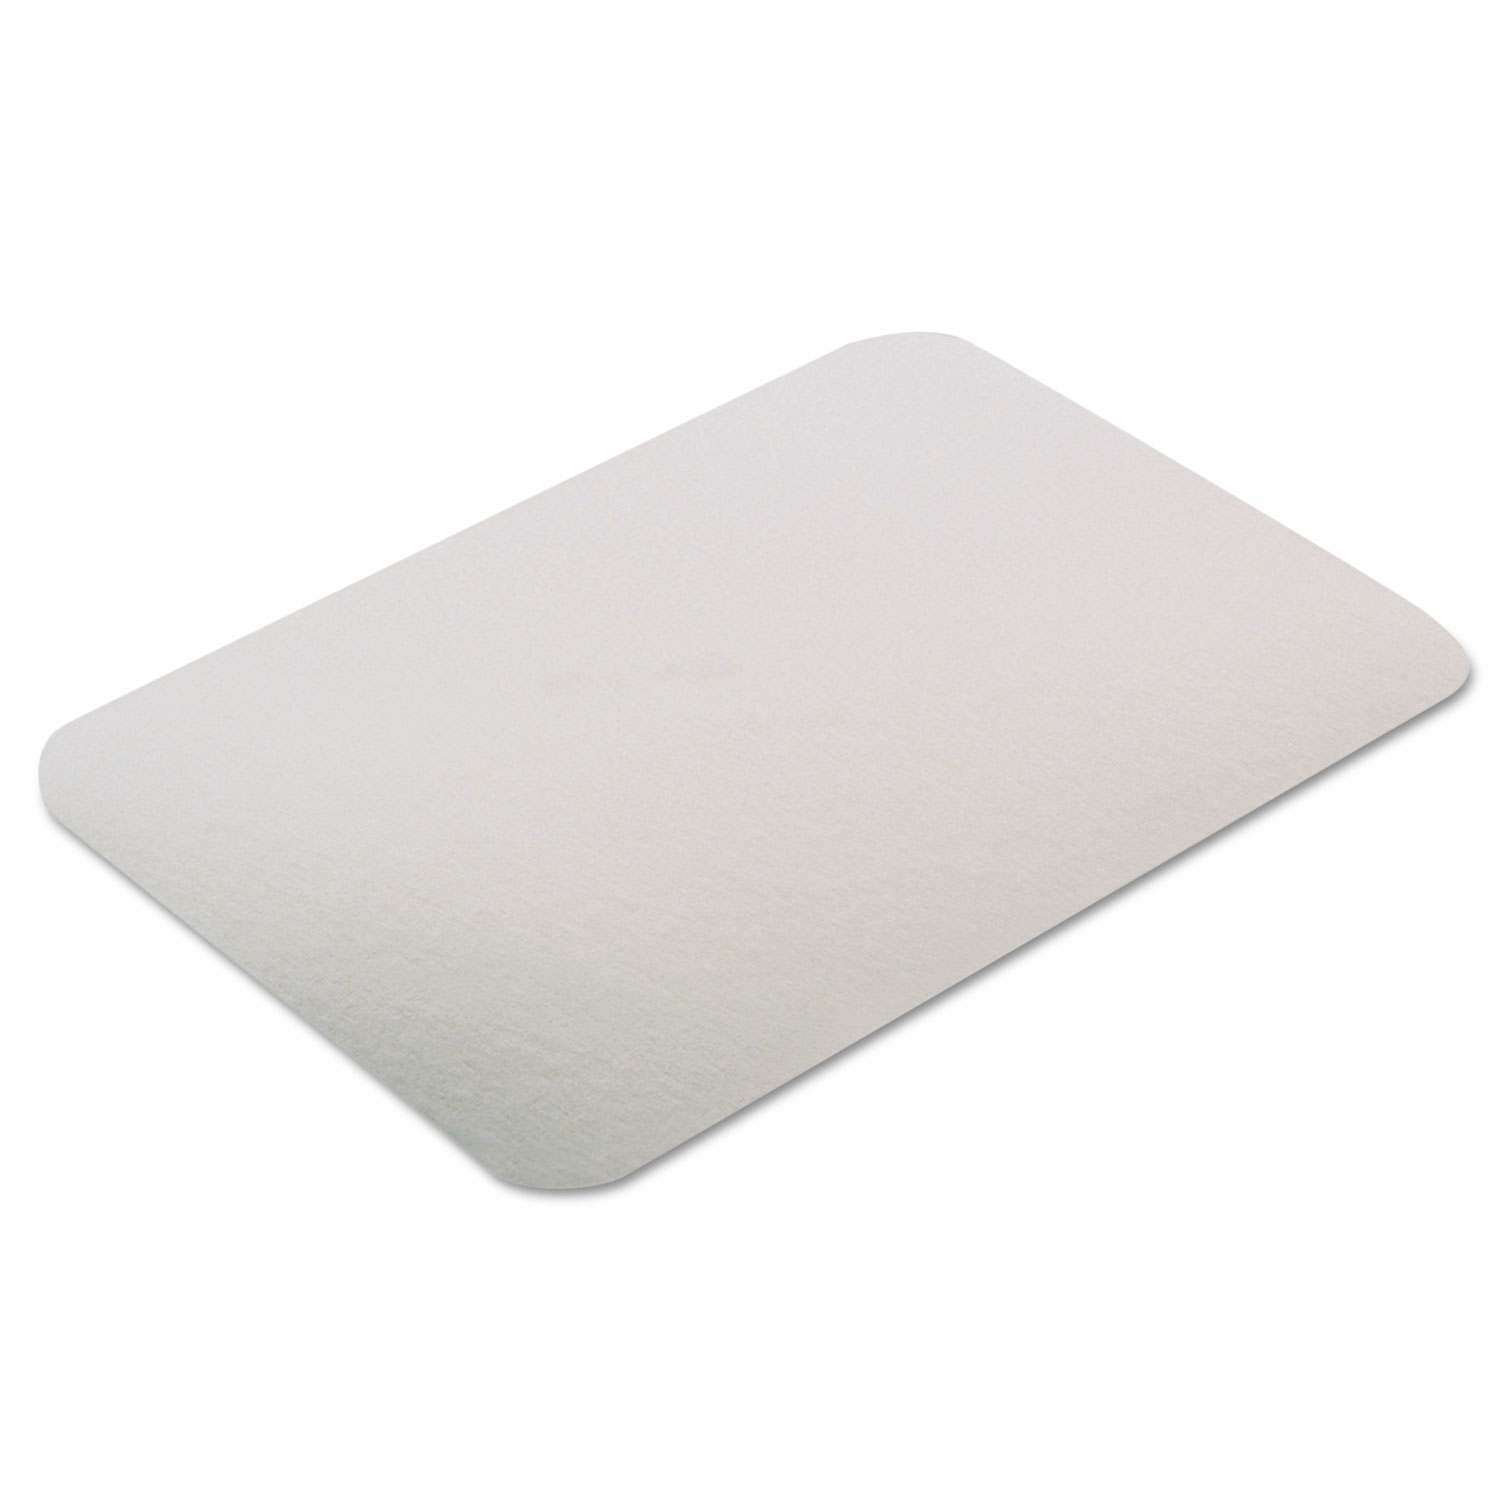 Pactiv Rectangular Flat Bread Pan Covers, White/Aluminum, 8 2/5w x 5 9/10d, 400/Carton